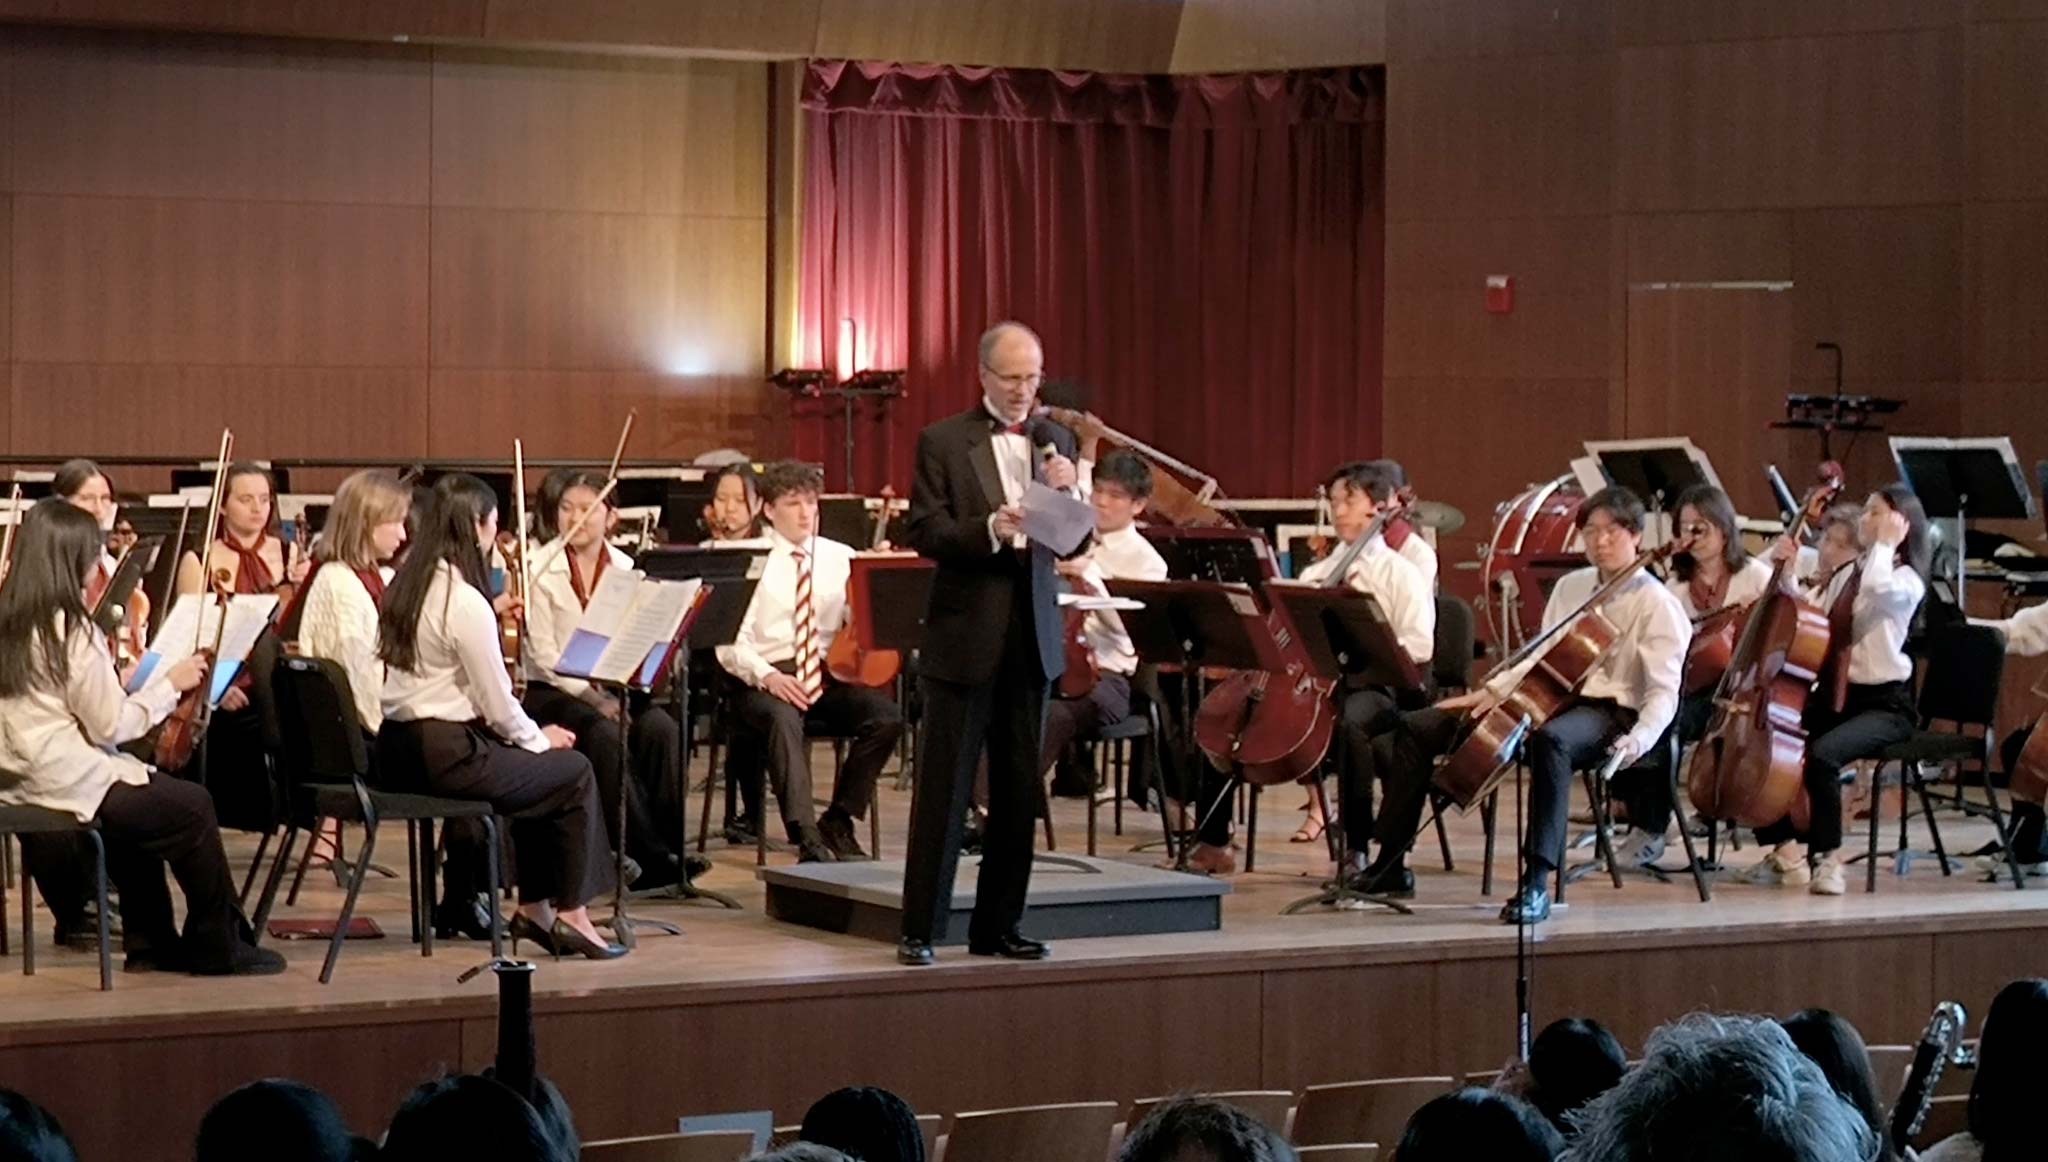 Student orchestra at Northfield Mount Hermon School